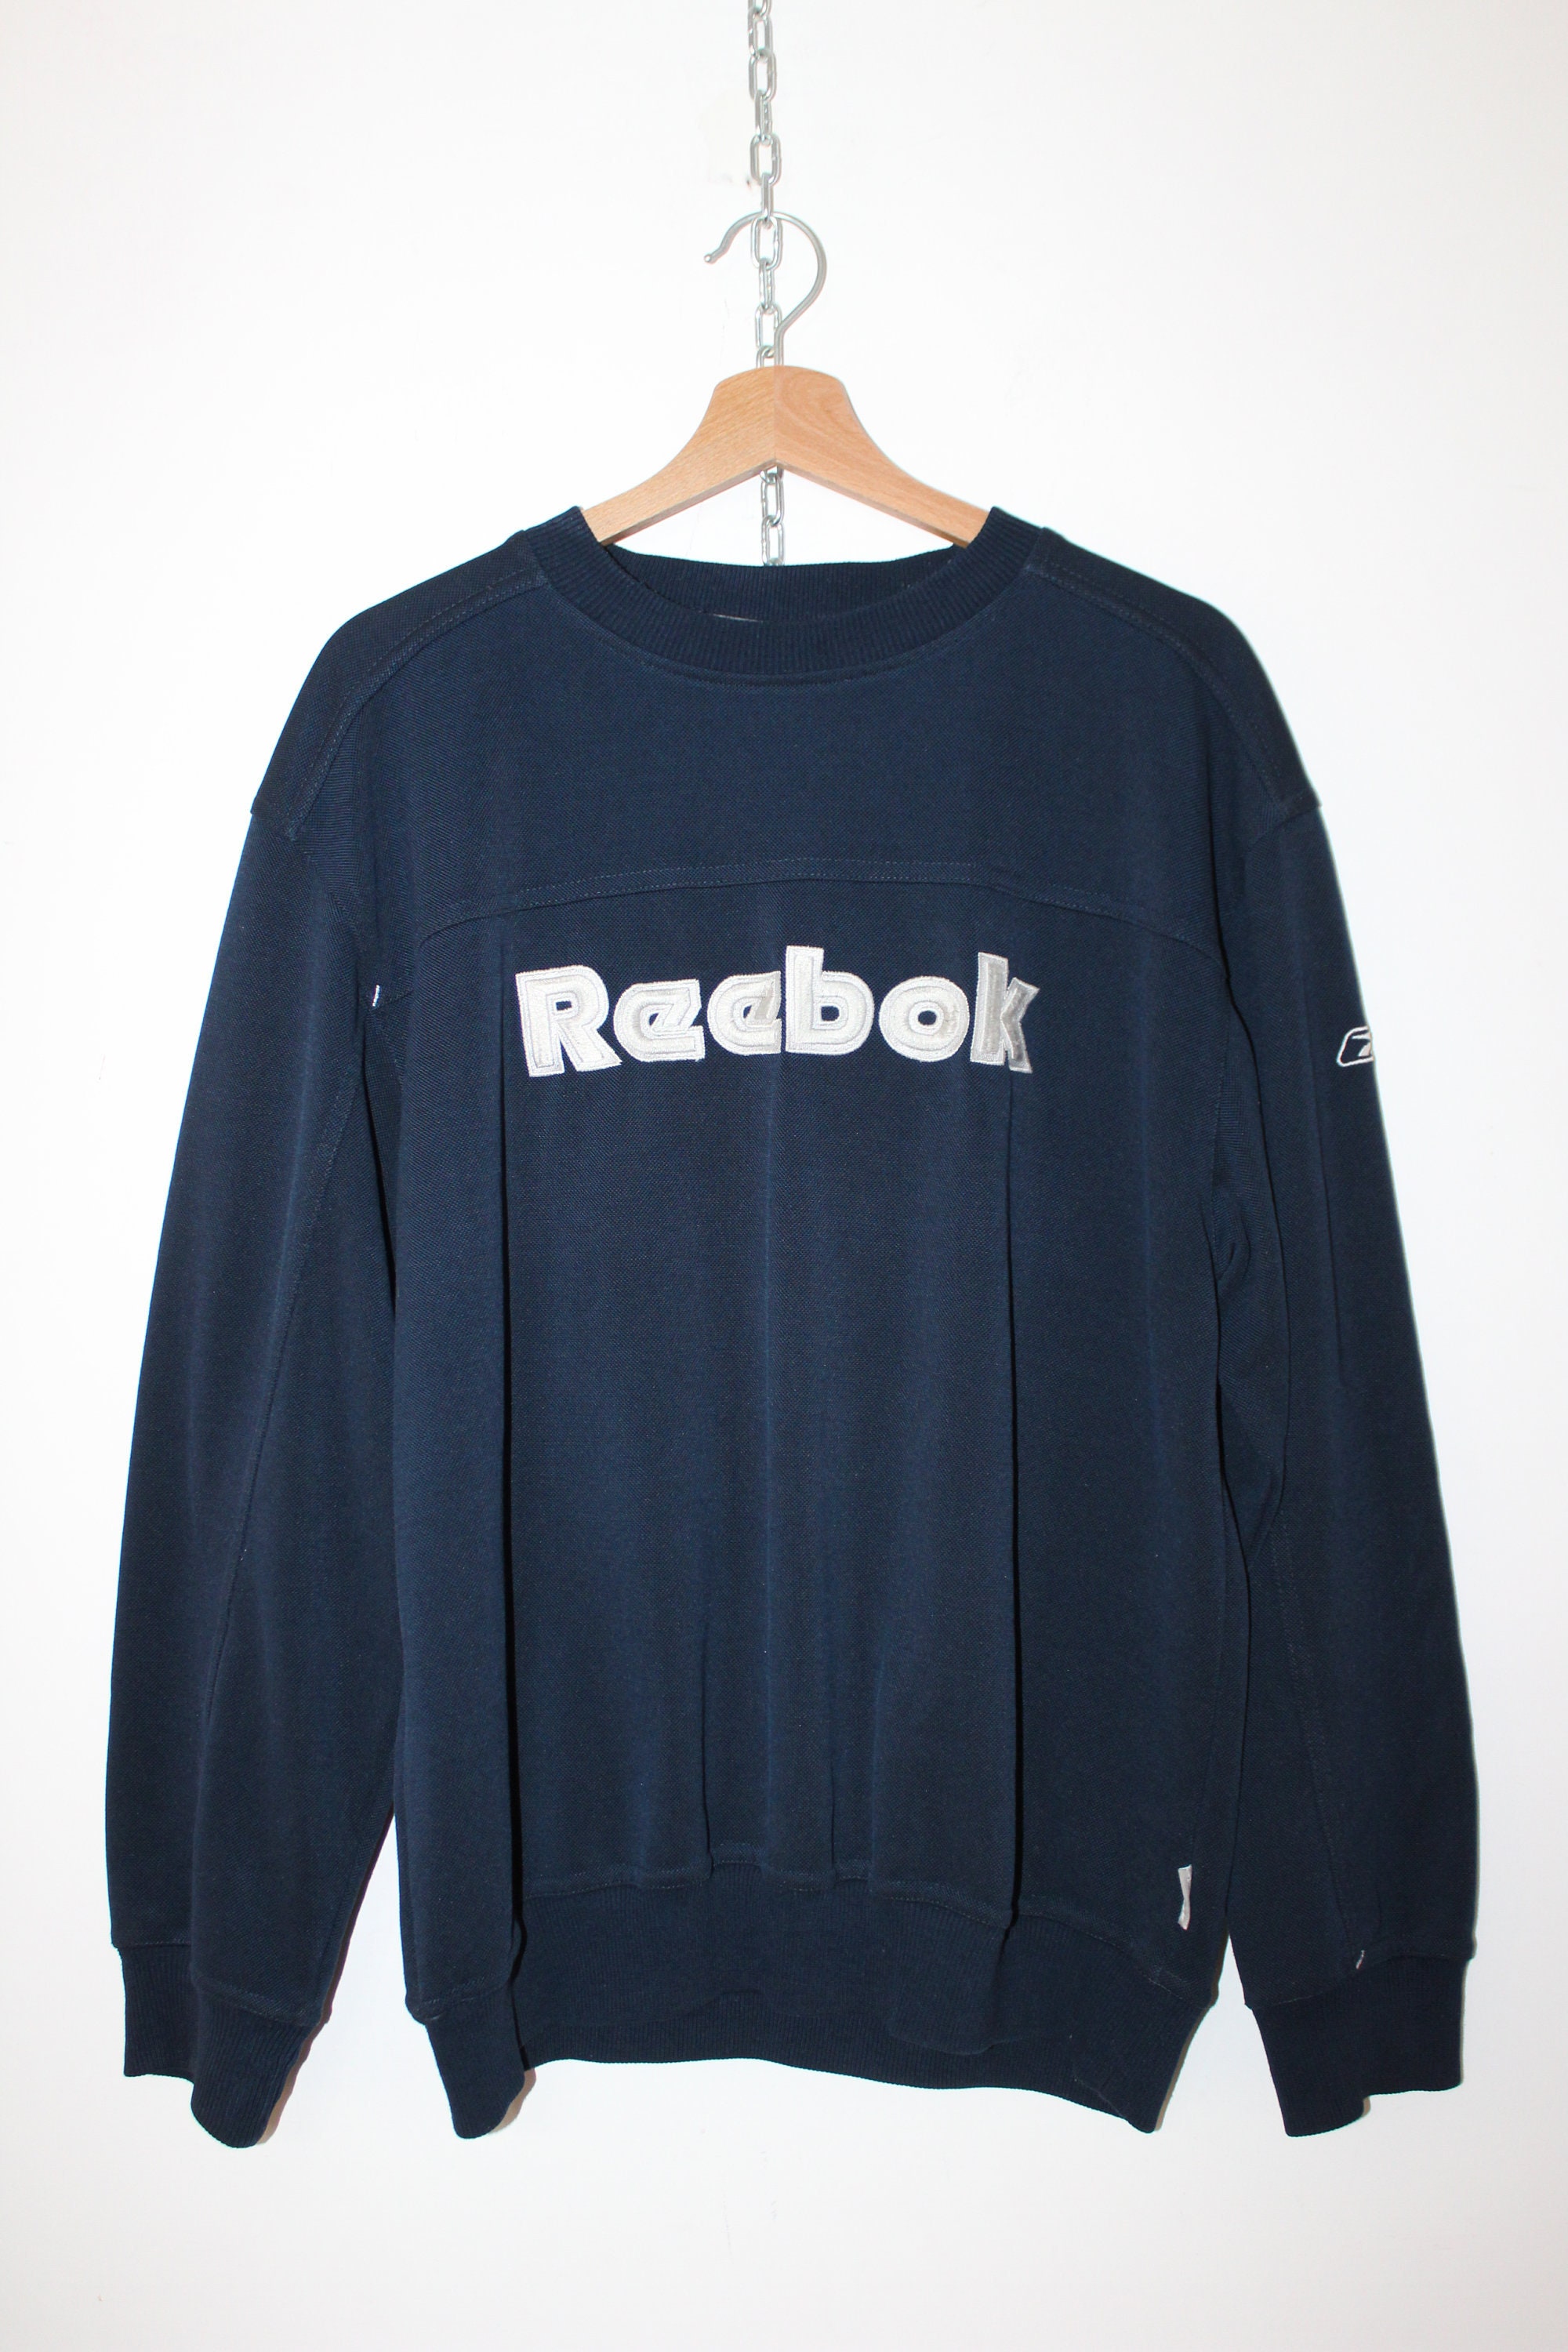 Reebok Sweatshirt Crewneck Vintage 90'S 